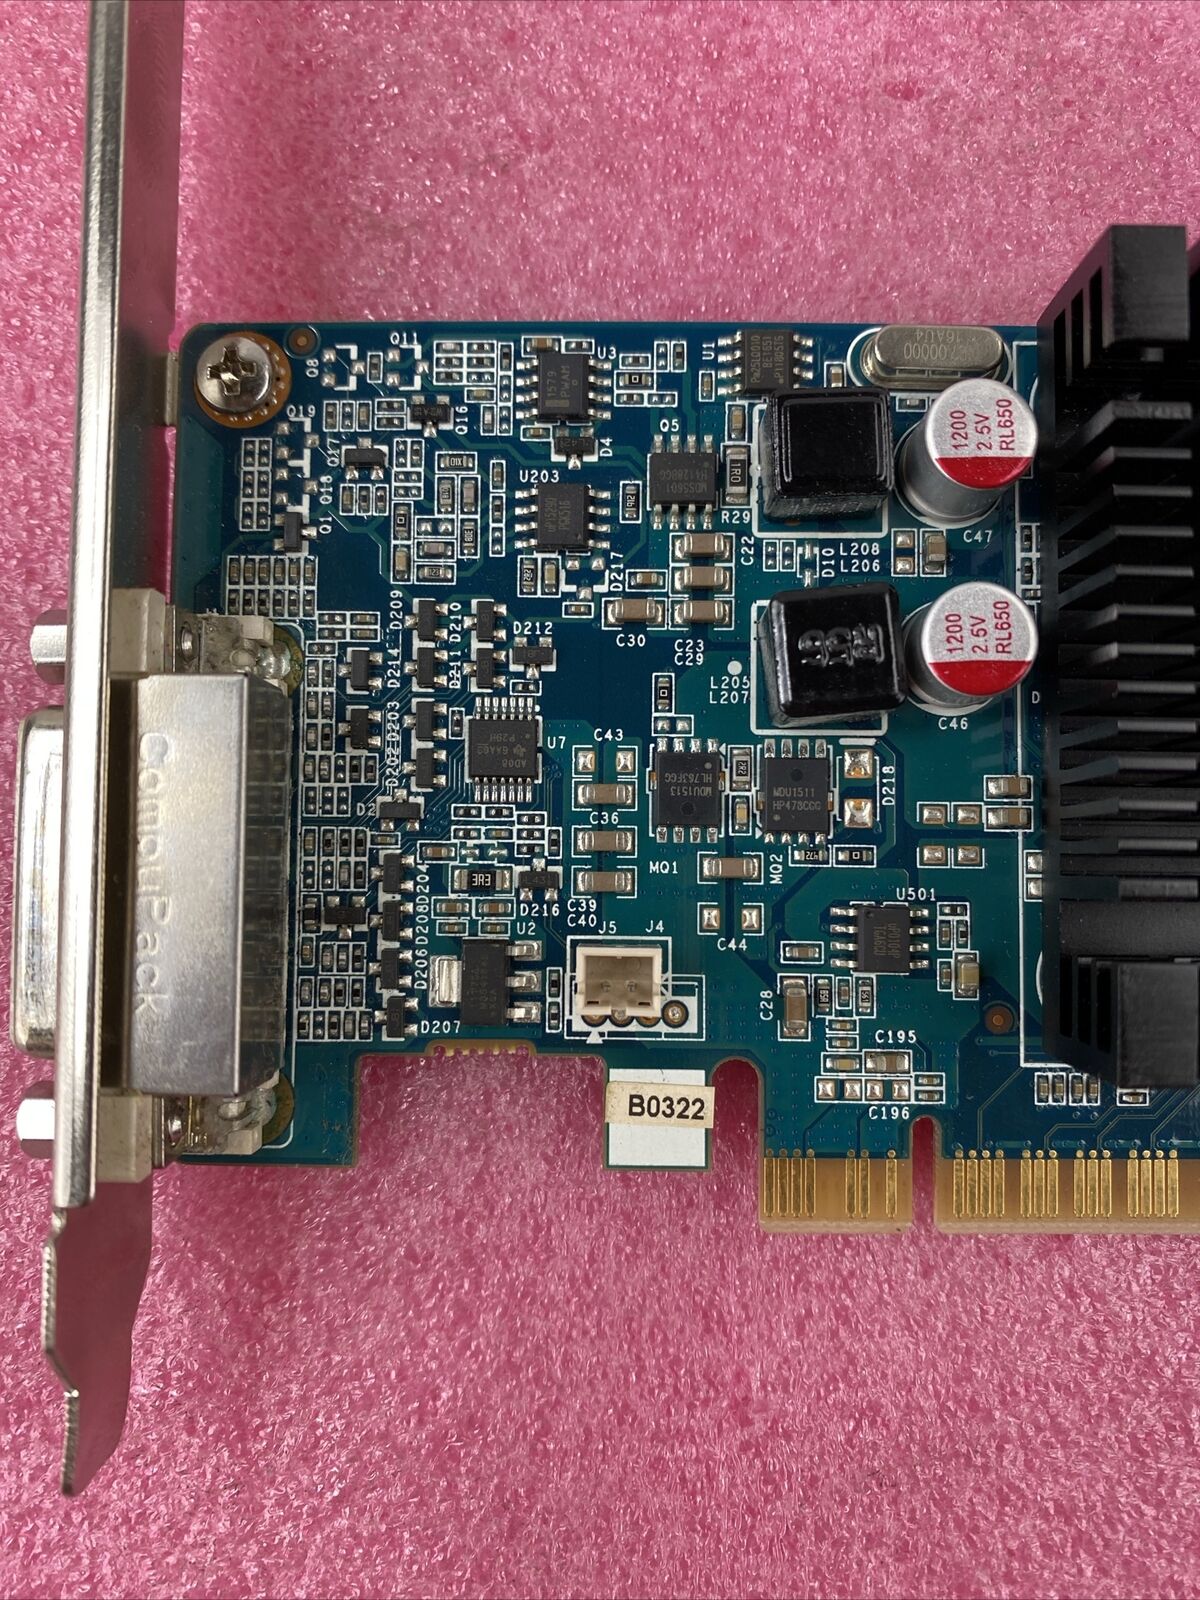 PNY 221217 Nvidia GeForce 8400 GS 1GB DDR3 Dual Monitors DVI PCIe 2